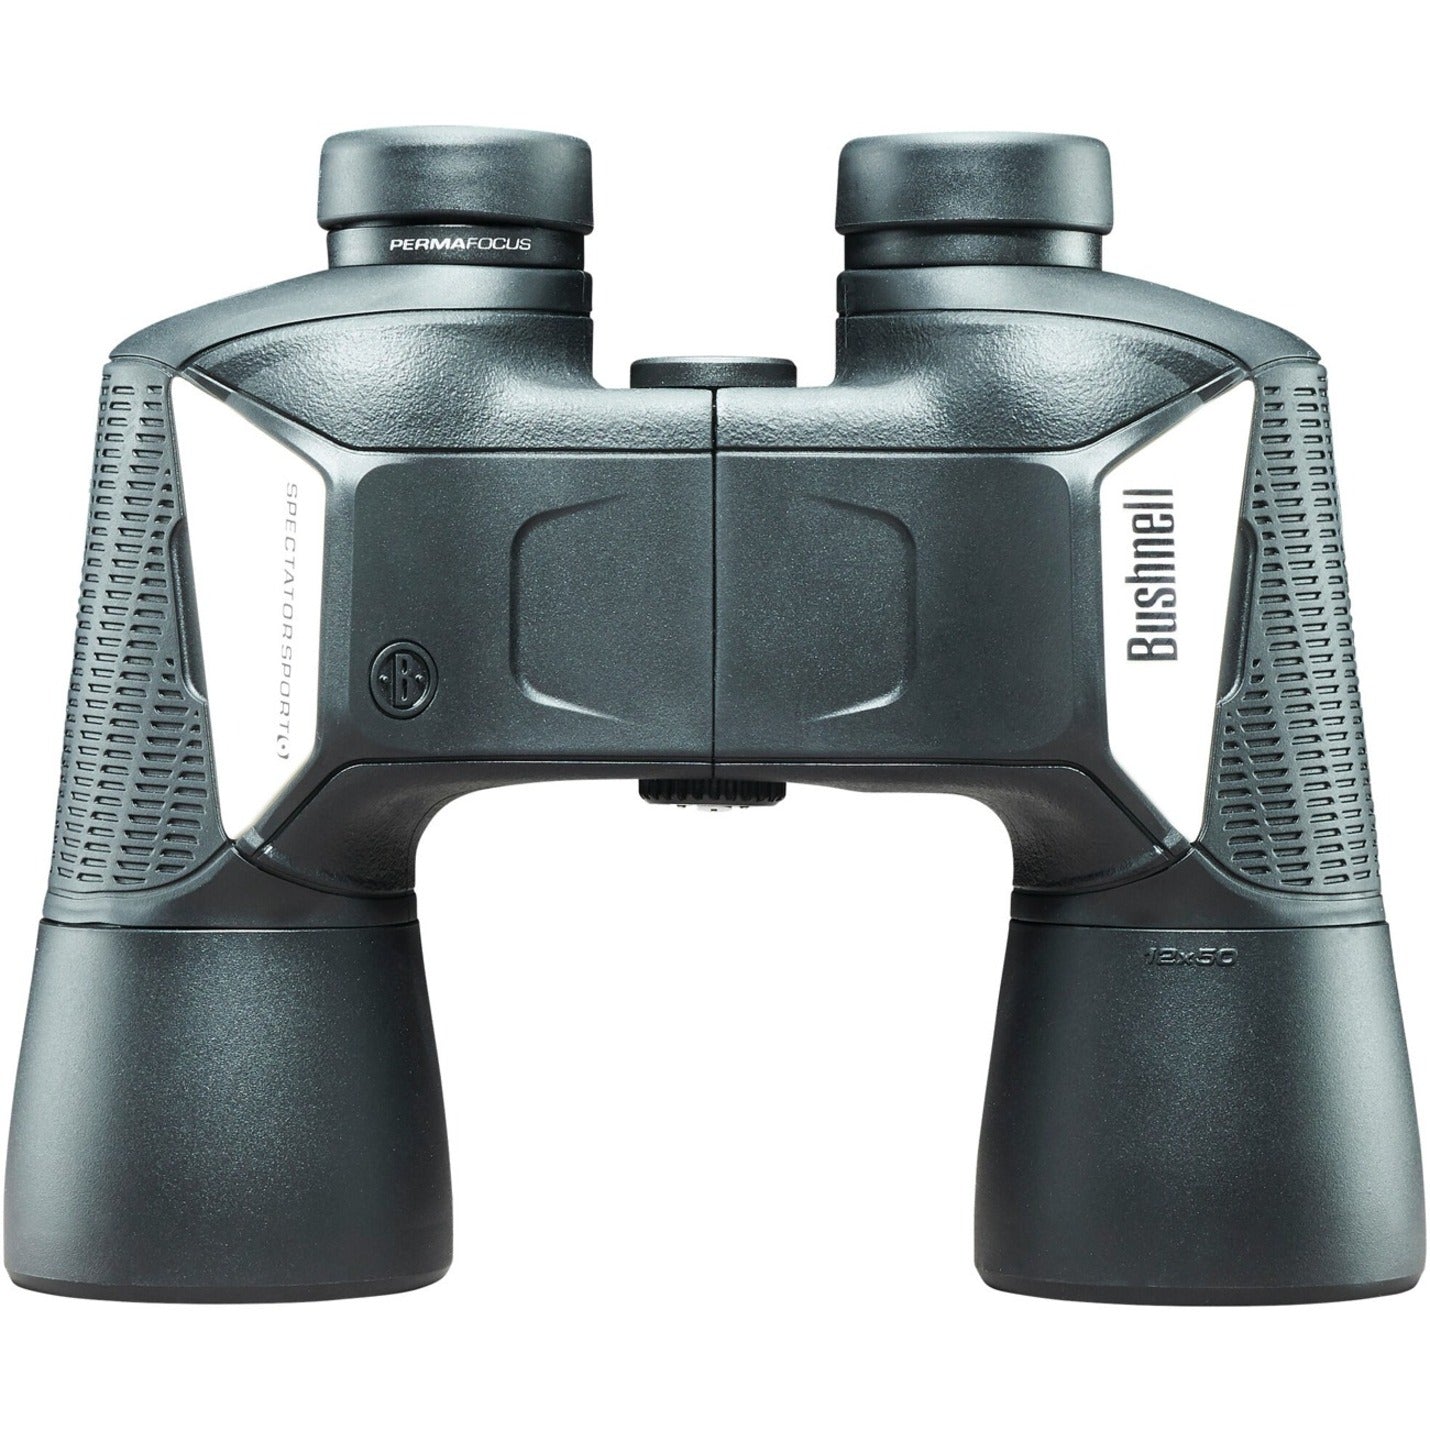 Bushnell BS11250 Spectator Sport Binoculars 12X50, Night Vision, Water Resistant, Fog Proof